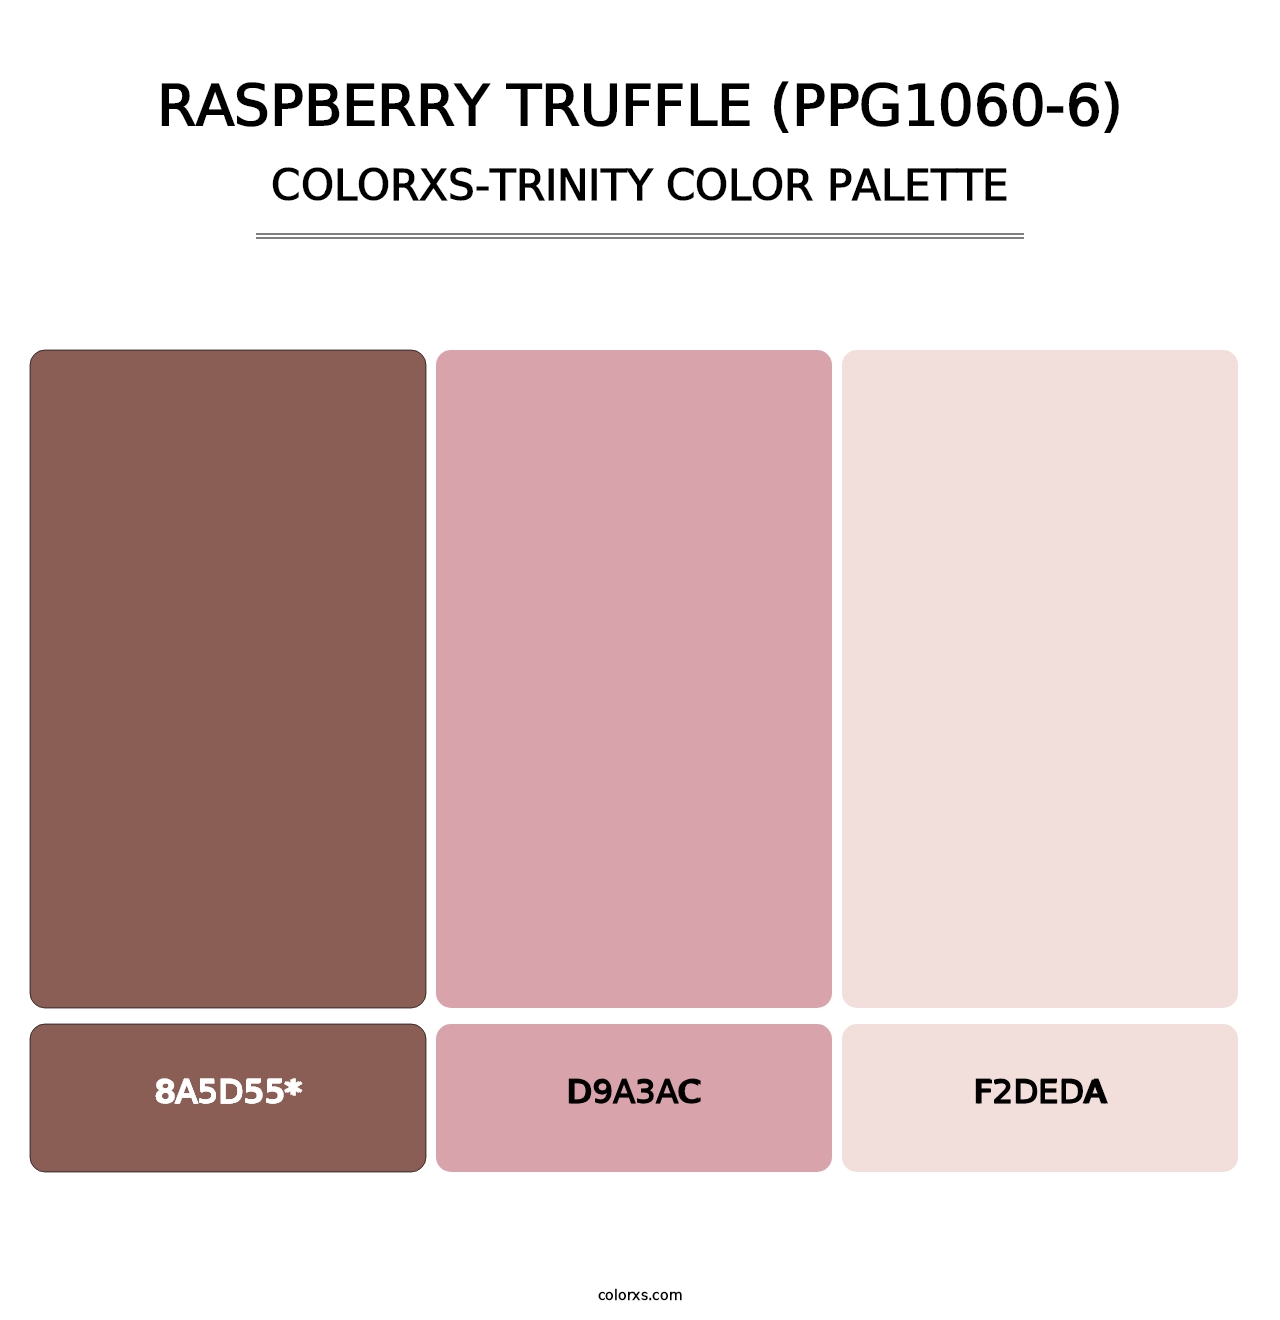 Raspberry Truffle (PPG1060-6) - Colorxs Trinity Palette